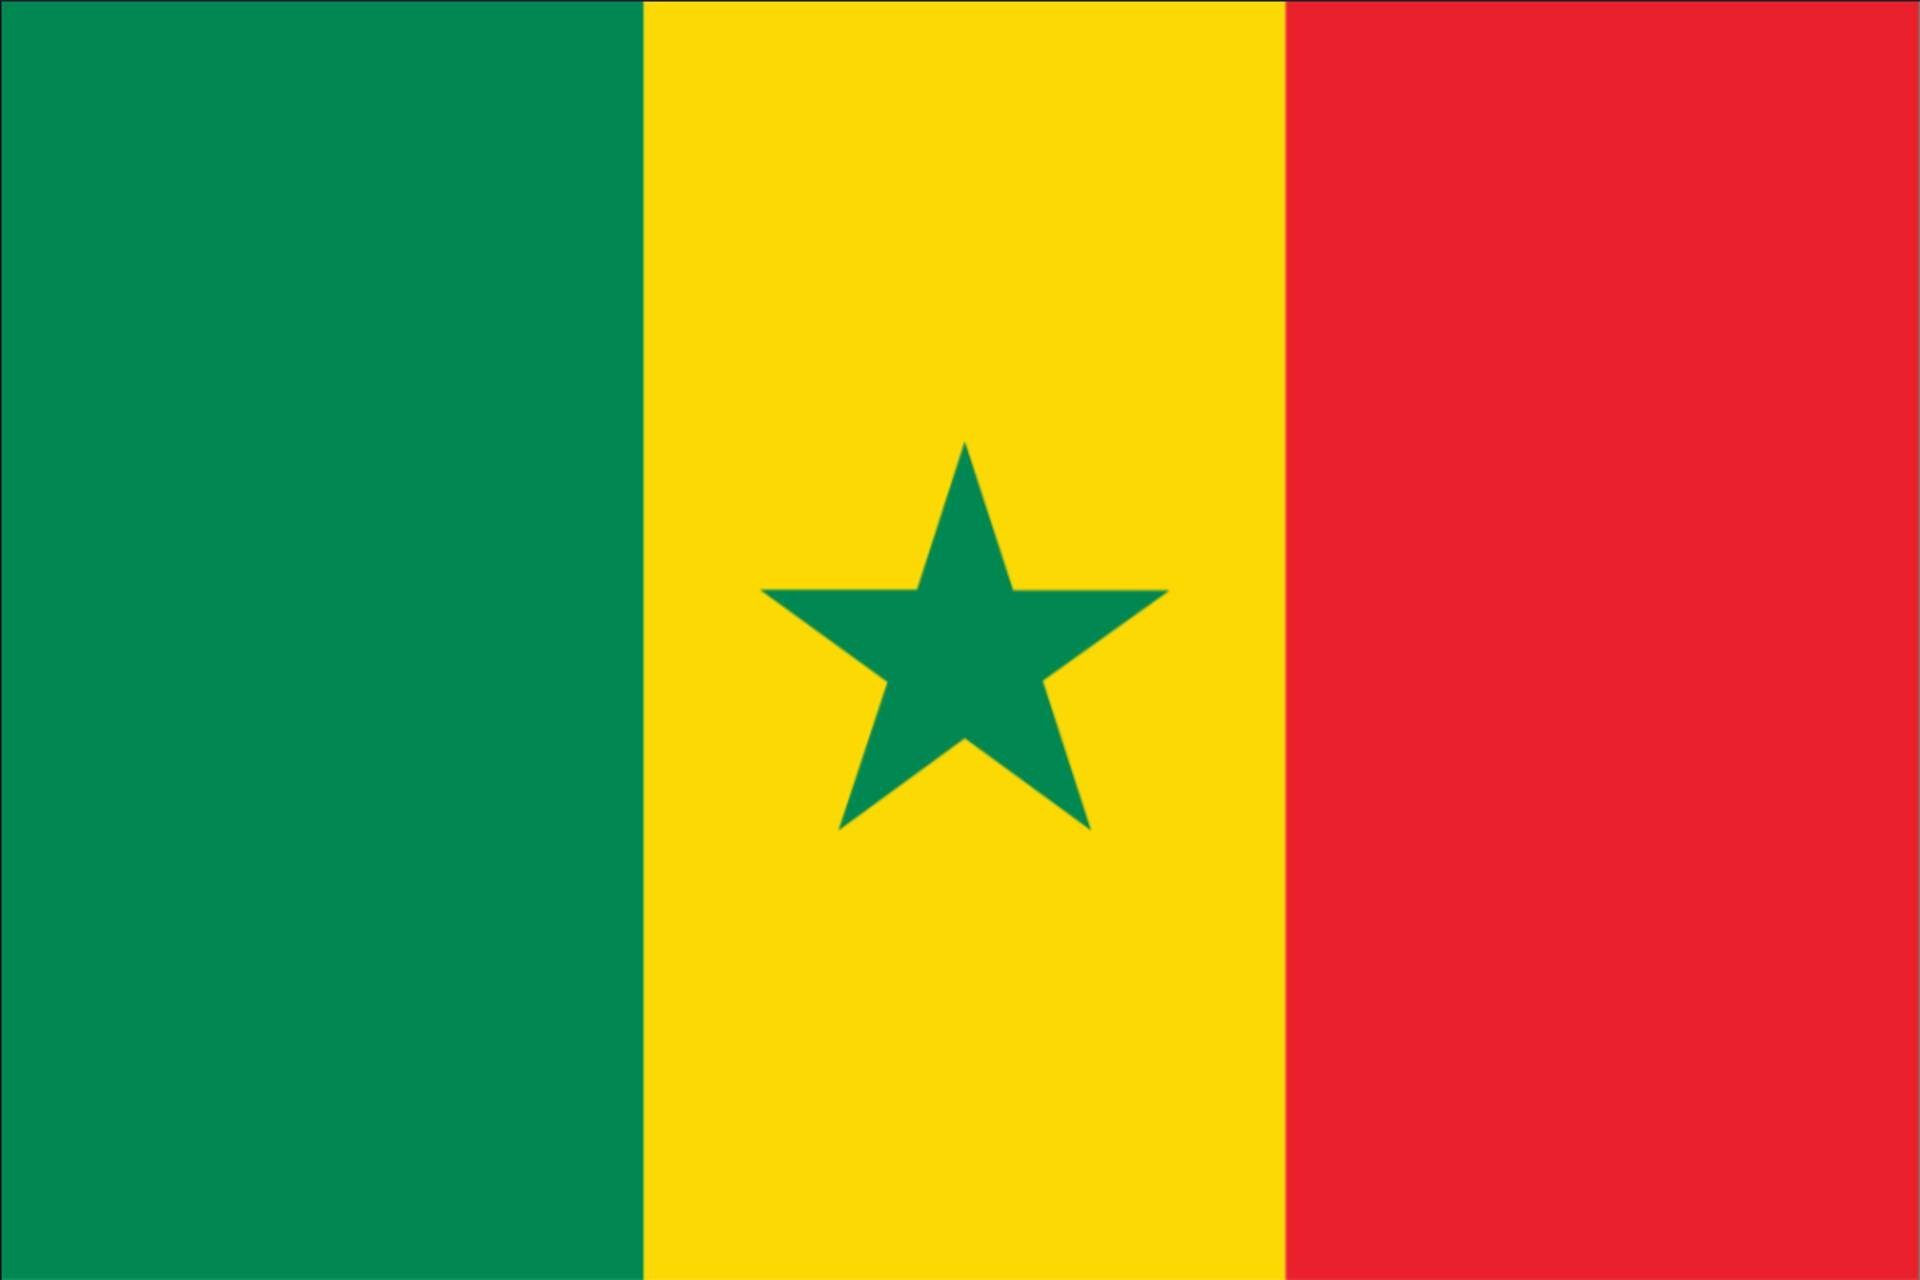 Flagge g/m² Flagge 110 Senegal flaggenmeer Querformat